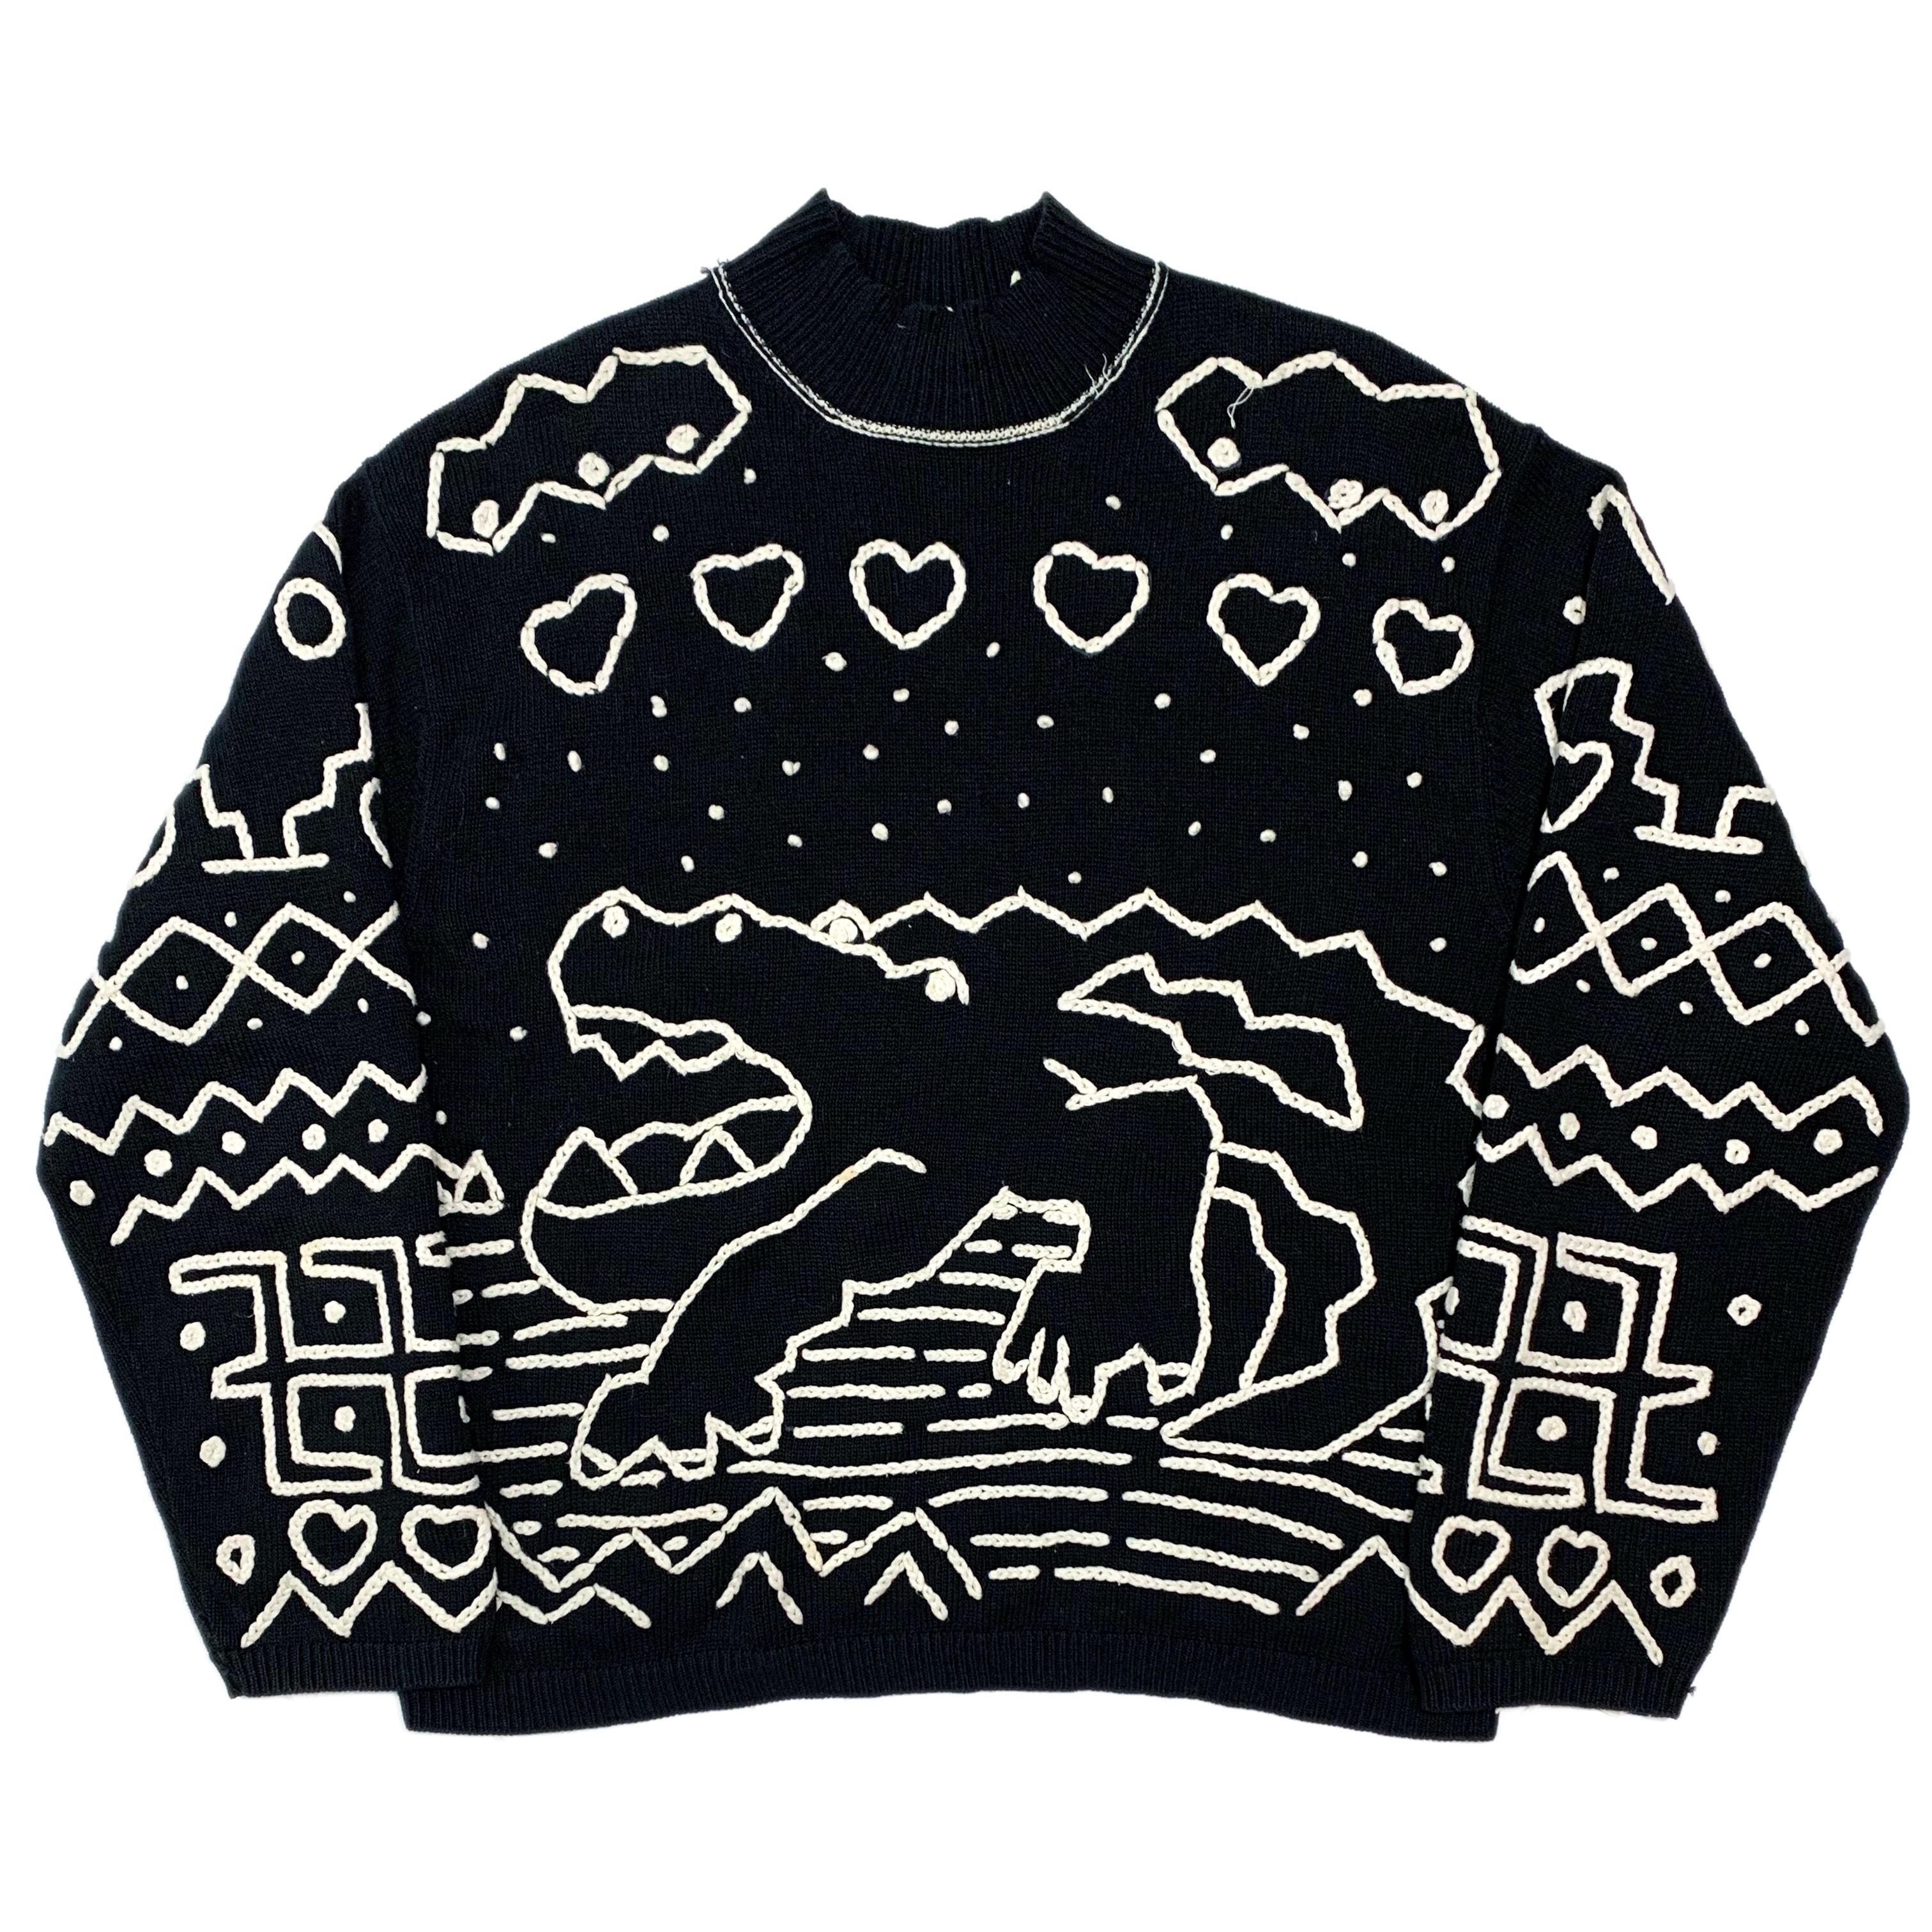 SS93 Crocodile Cotton Sweater - 3